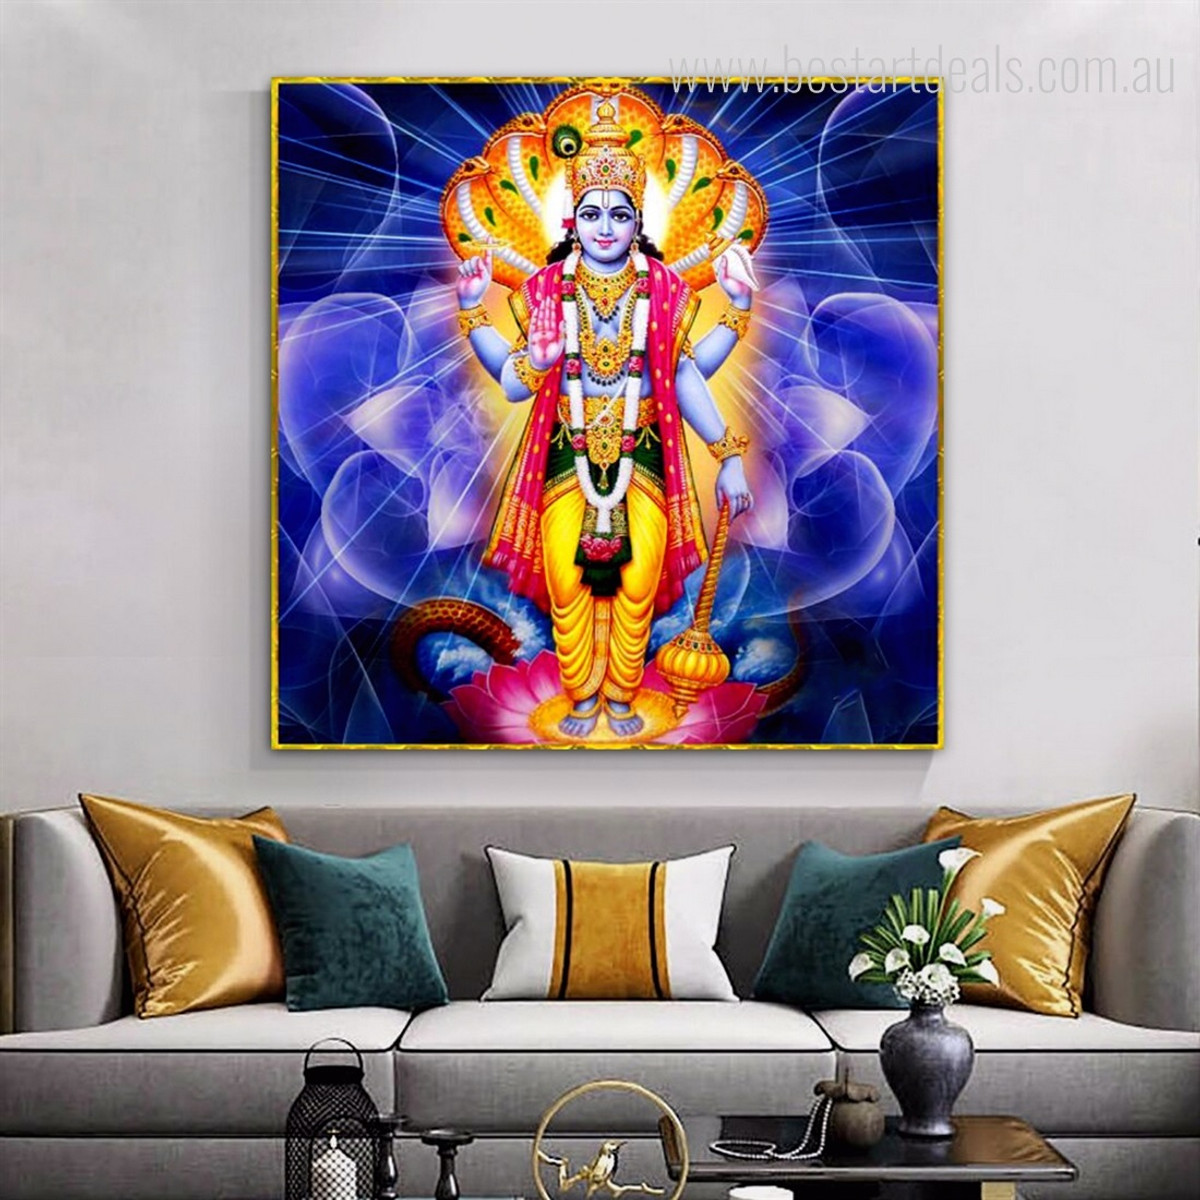 Vishnu Indian Religious Hindus God Canvas Print Modern Artwork Image for Wall Hanging Ornament